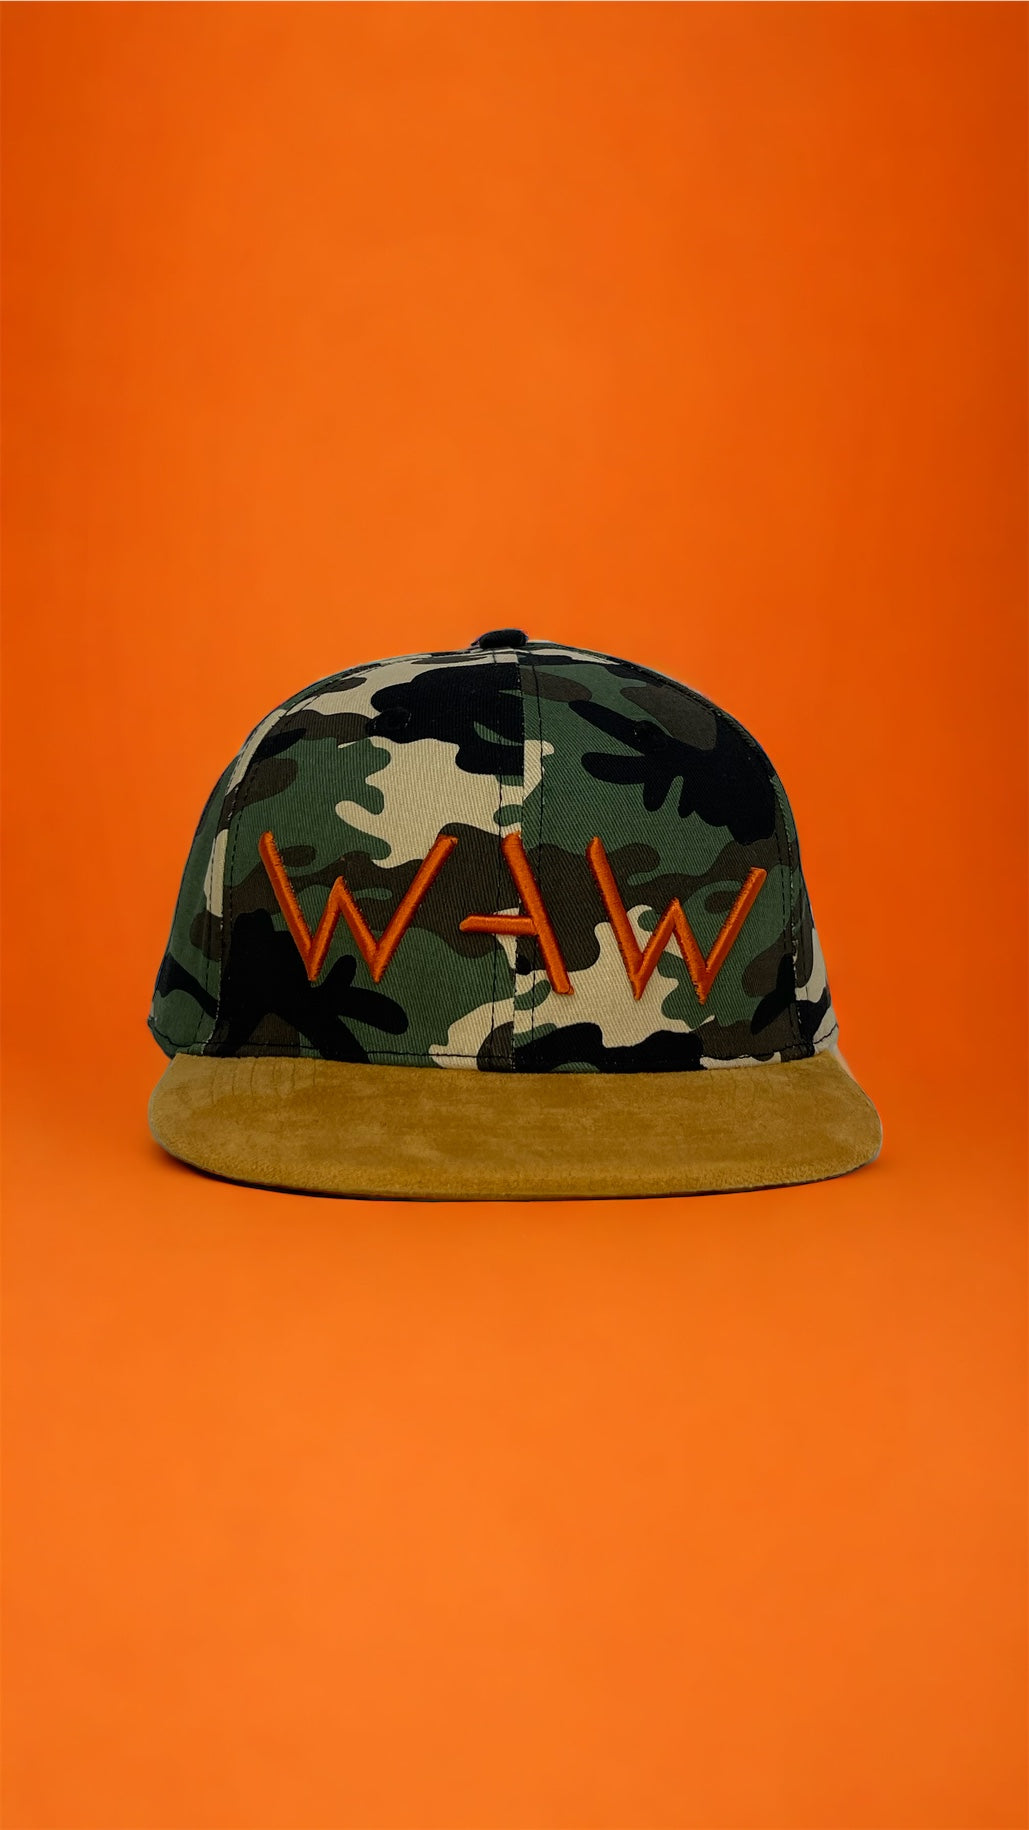 Camo WAW hat